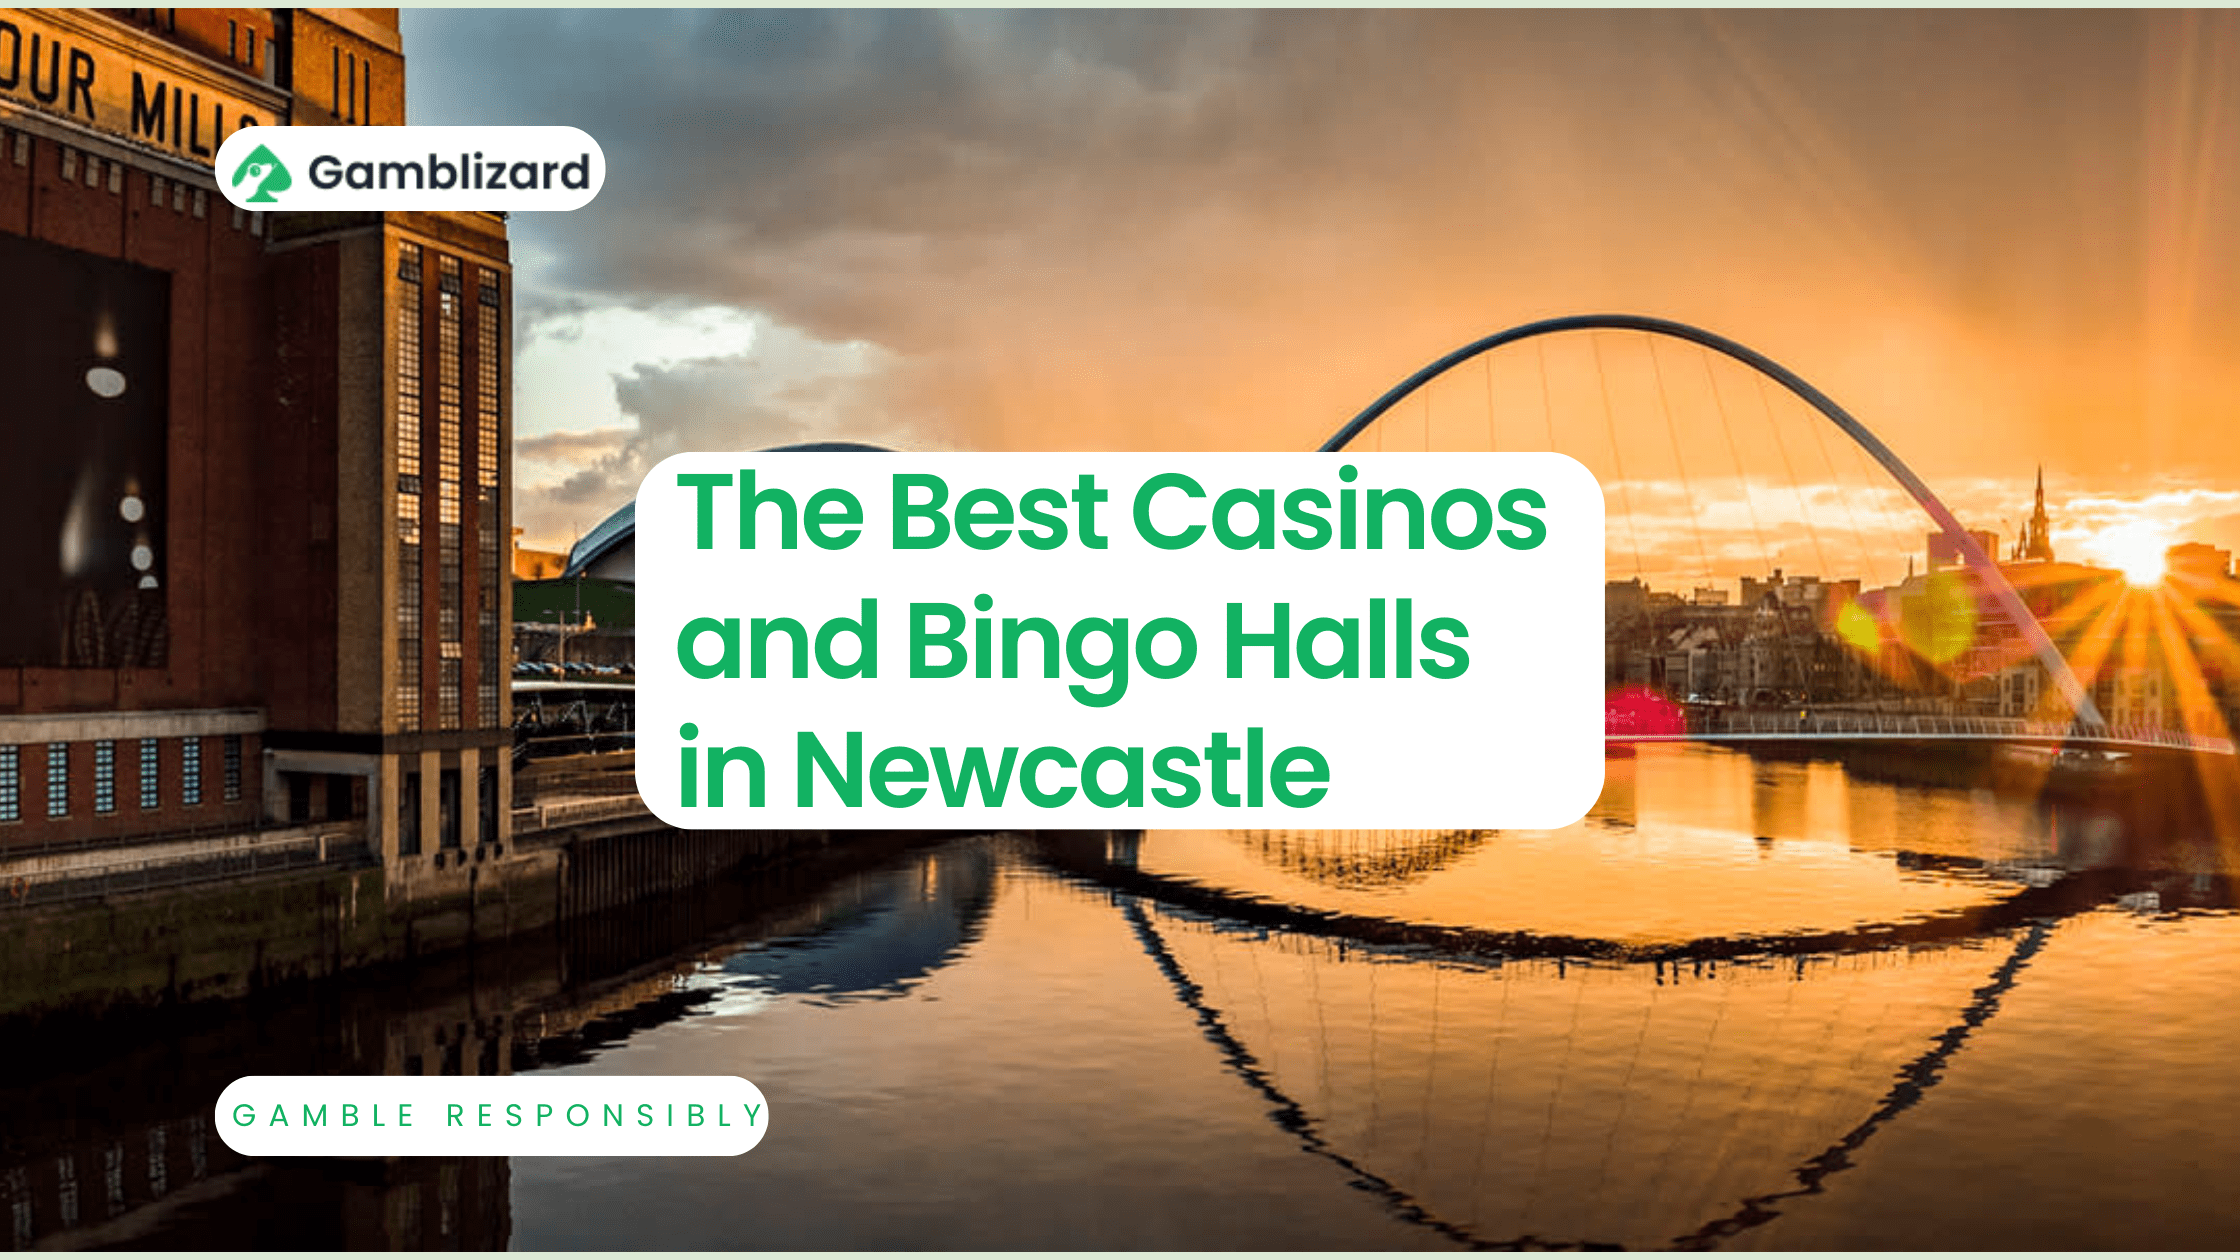 Casinos and bingo halls in Newcastle